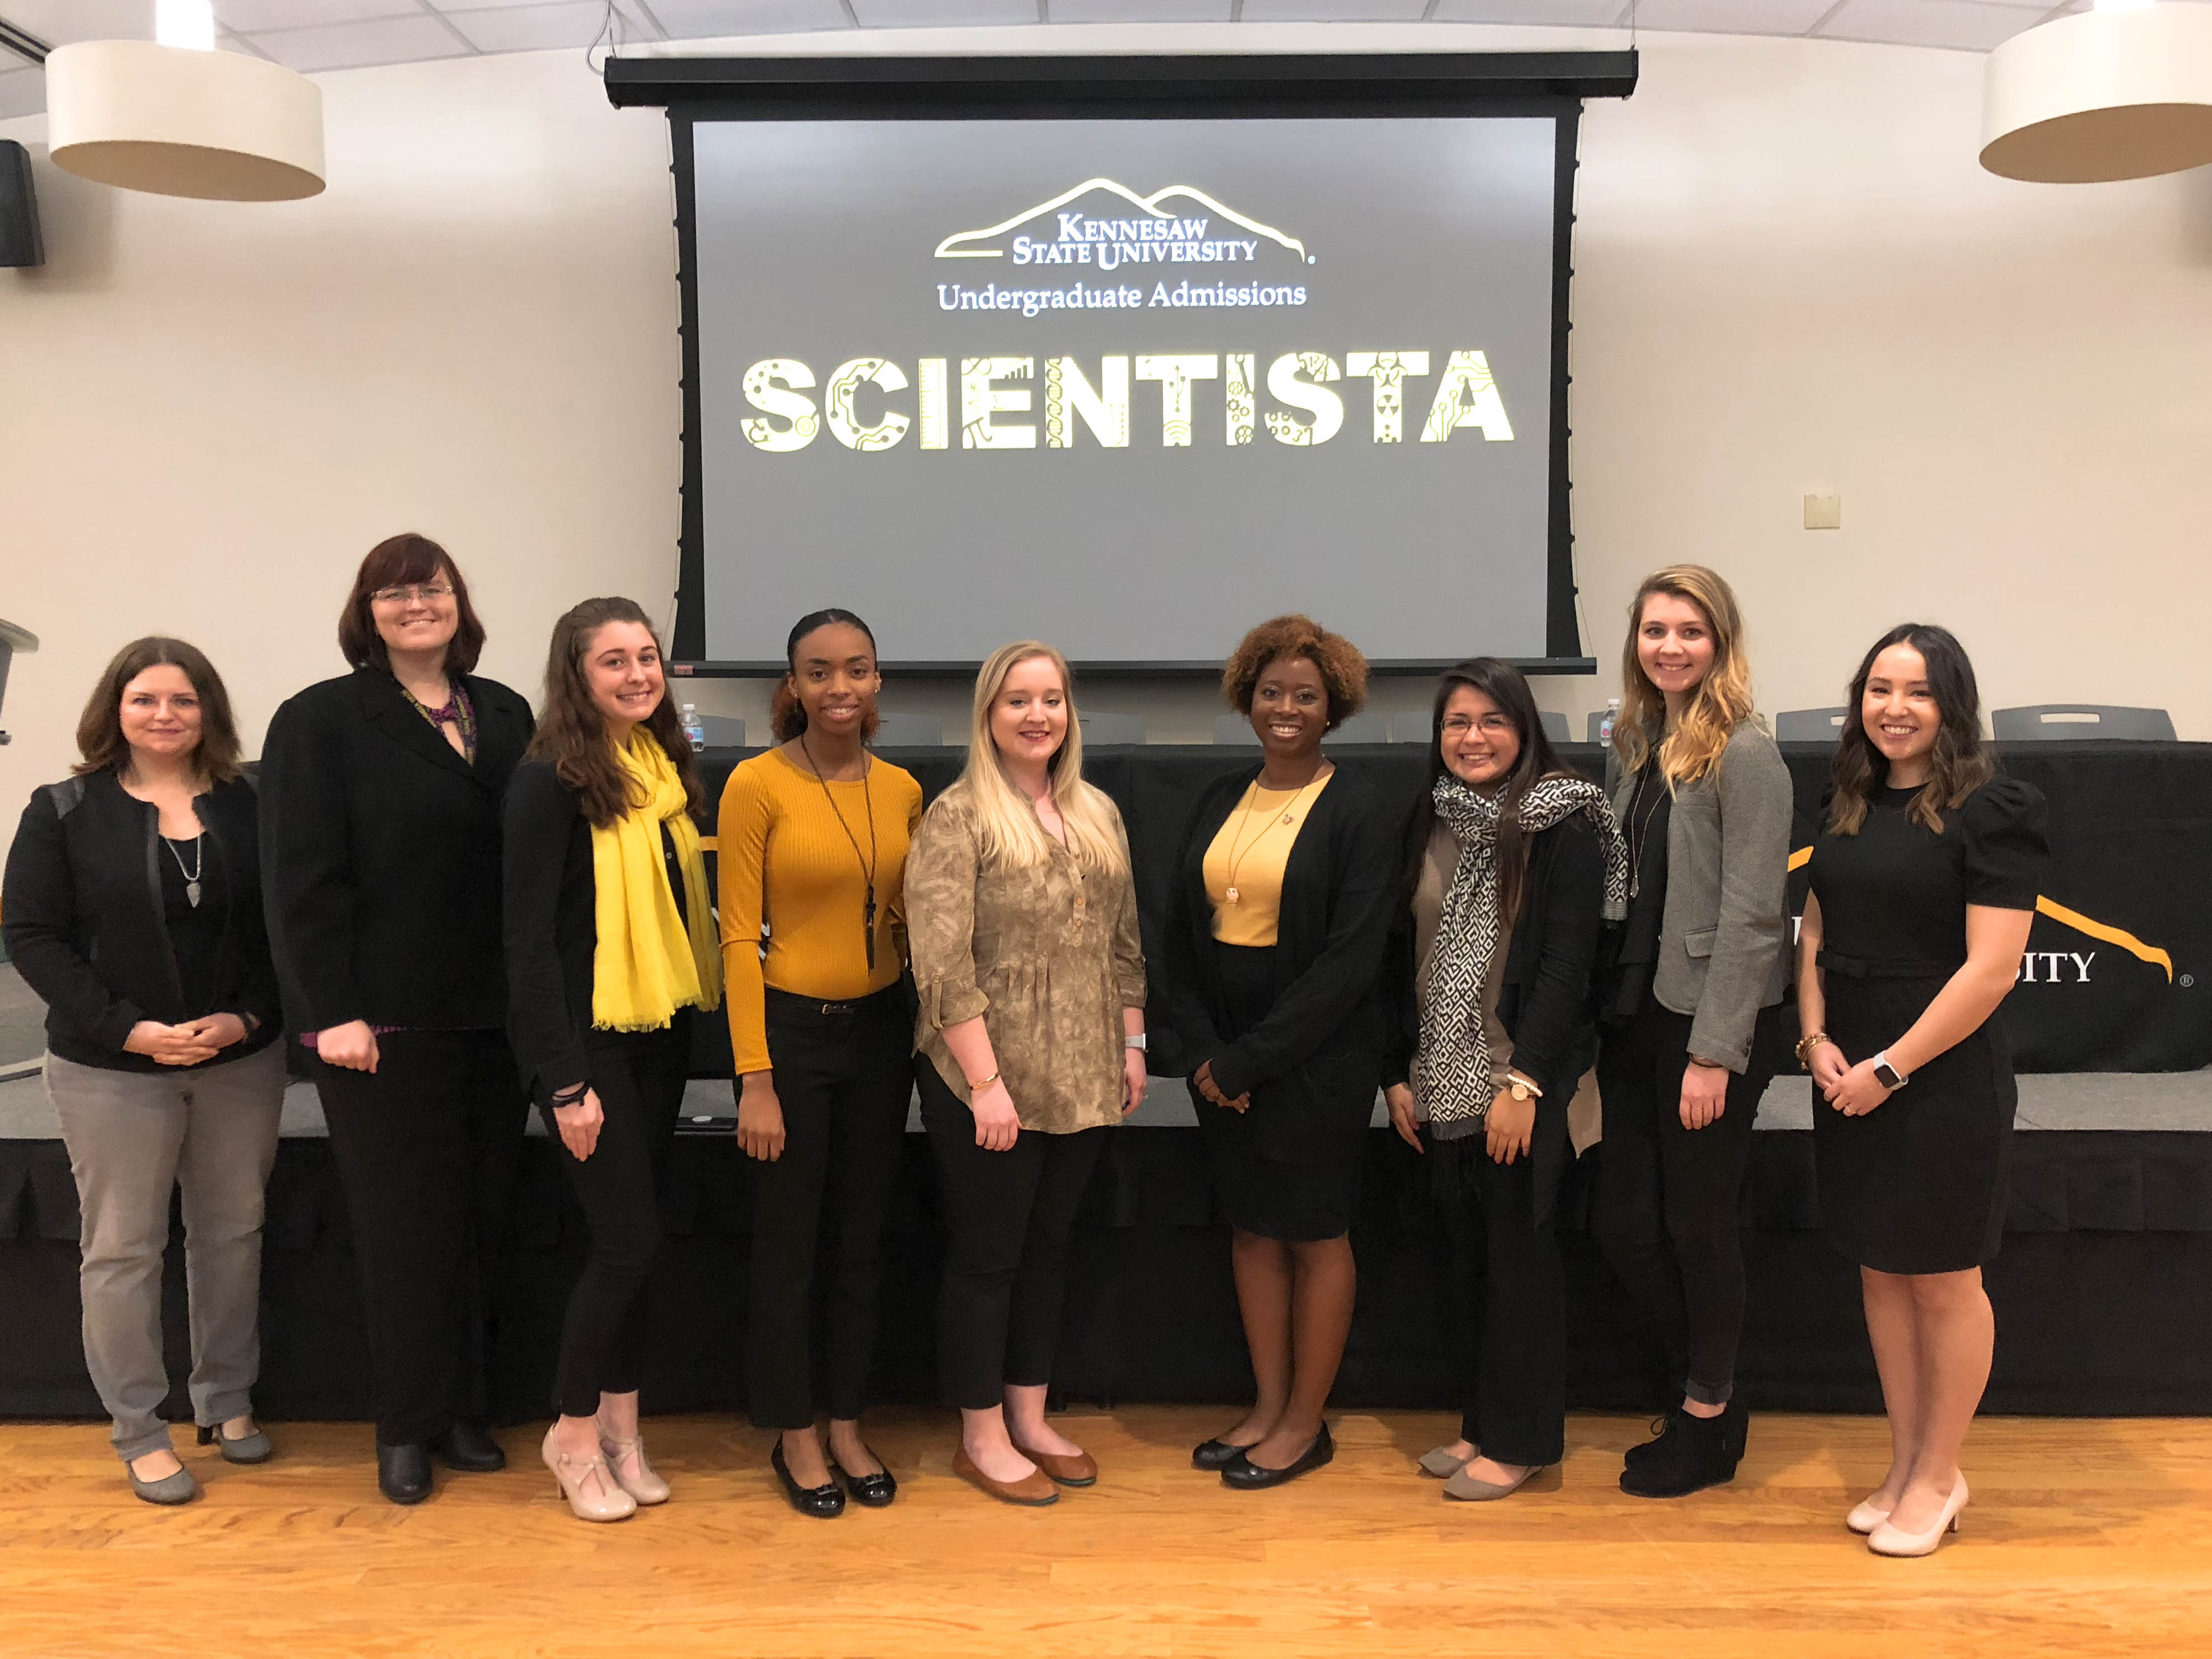 Scientista recruits women STEM students